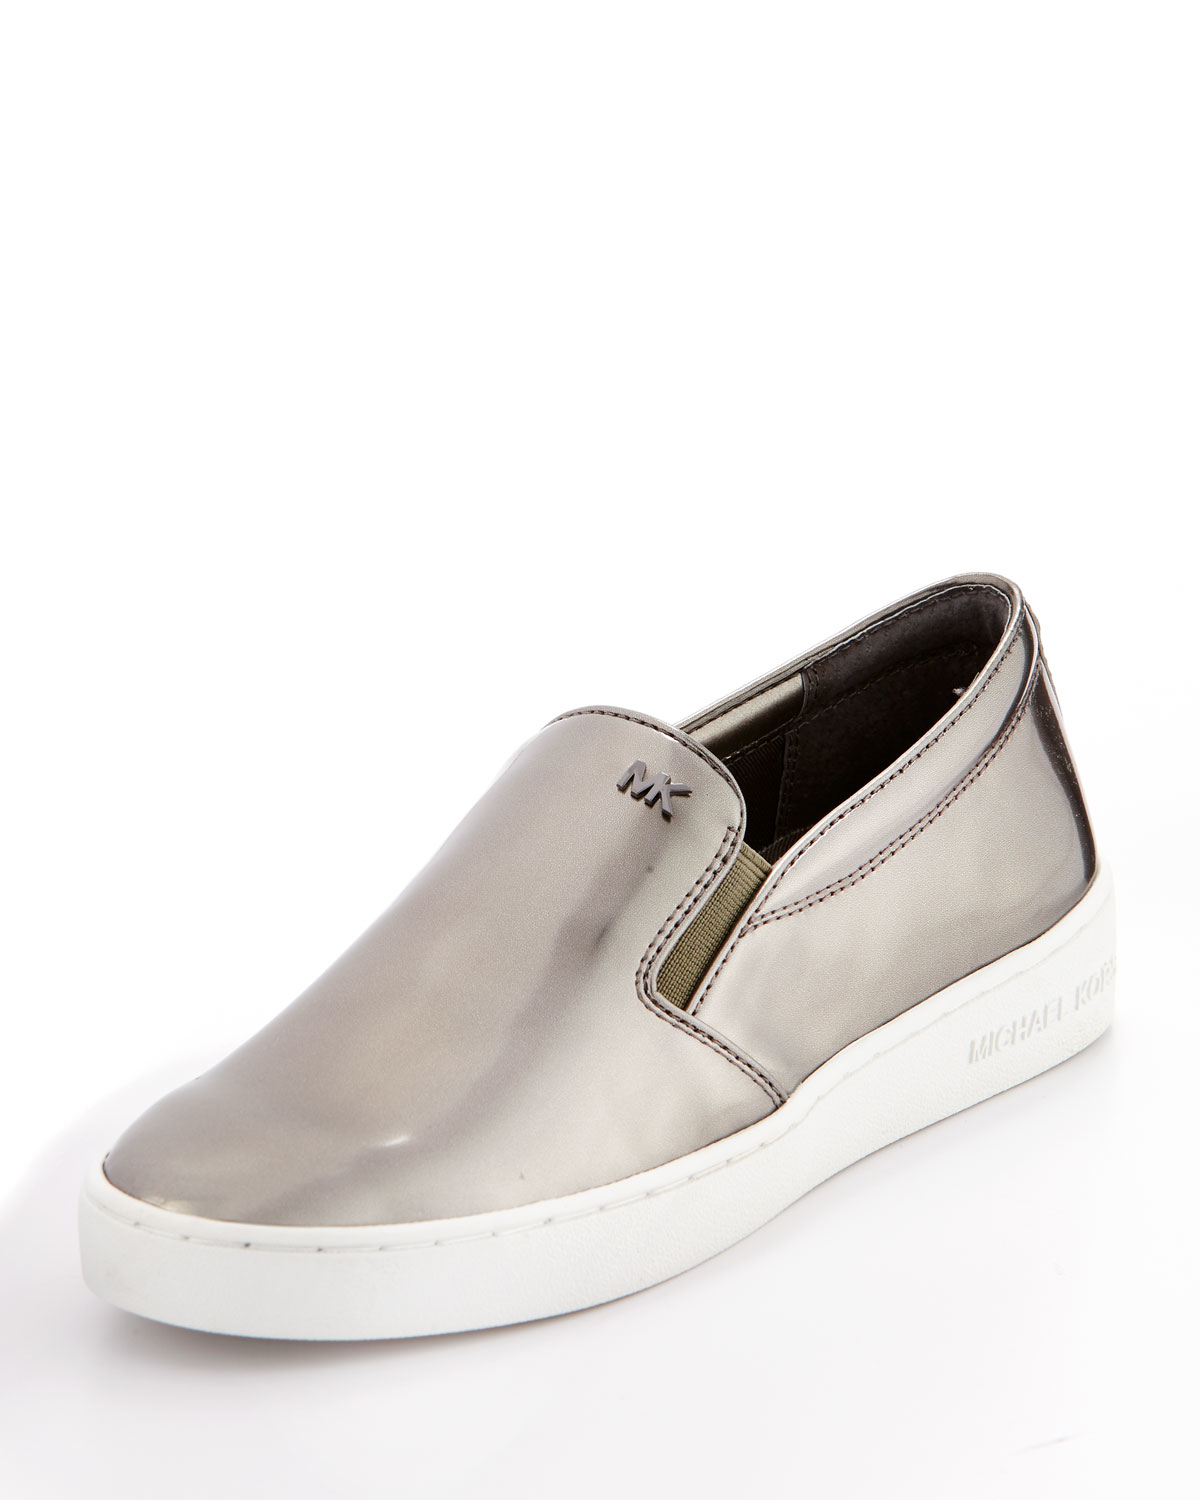 michael kors silver slip on shoes